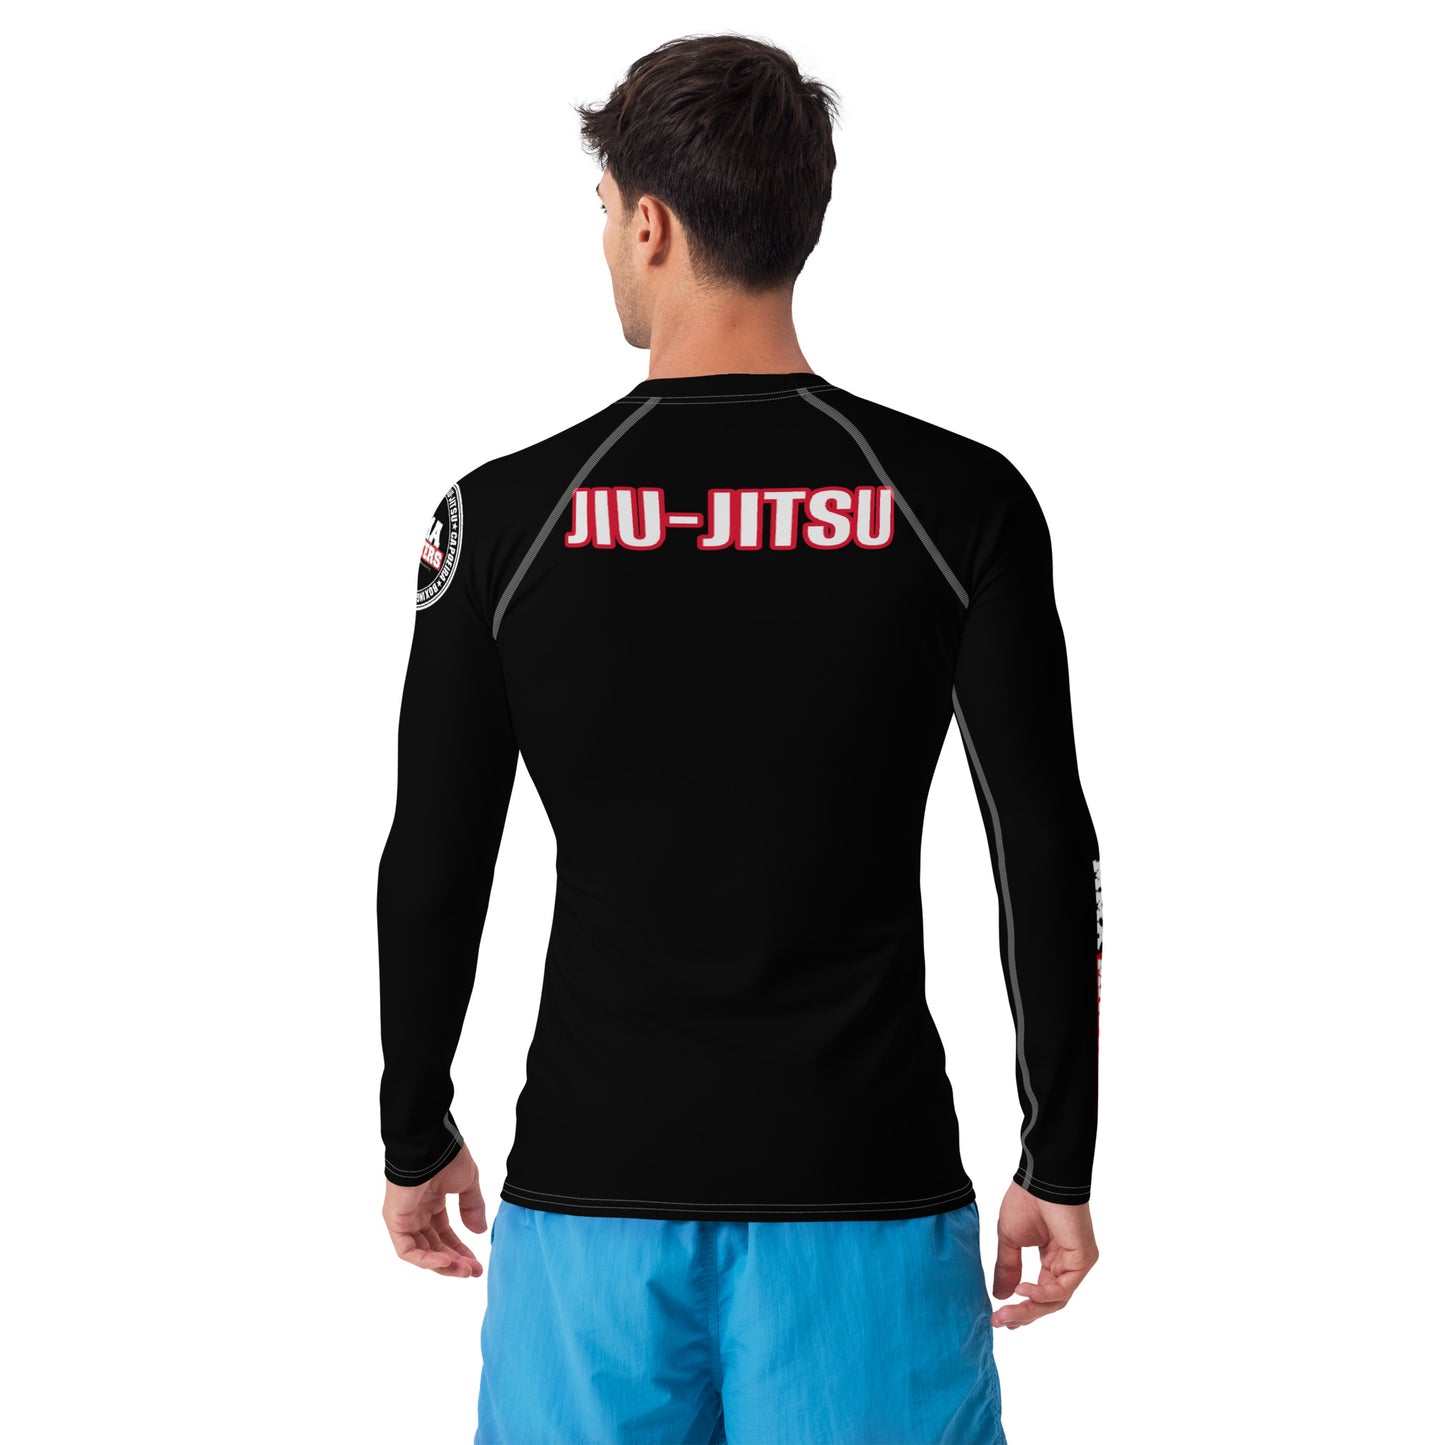 MMA MASTERS JIU JITSU Men's Rash Guard